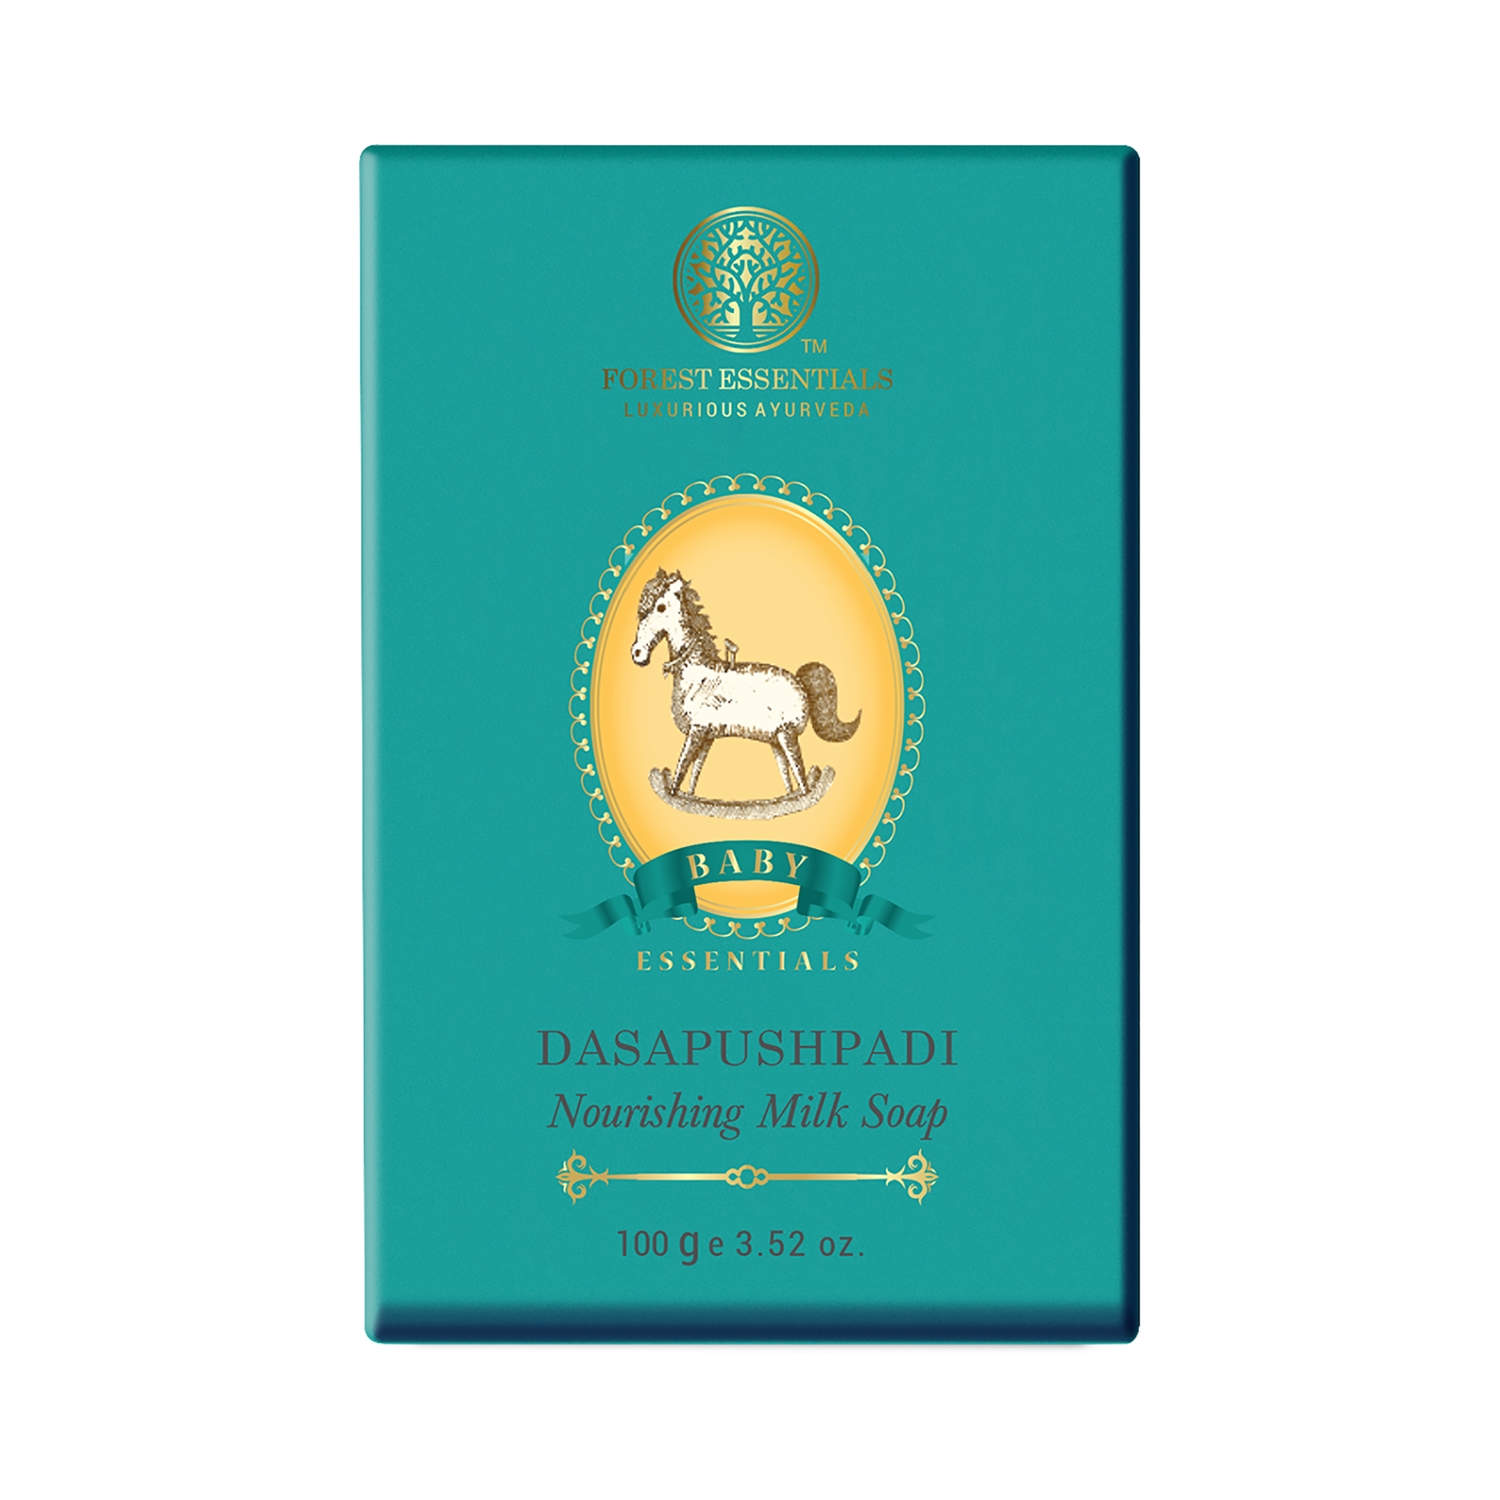 Forest Essentials Dasapushpadi Nourishing Baby Milk Soap (100g)